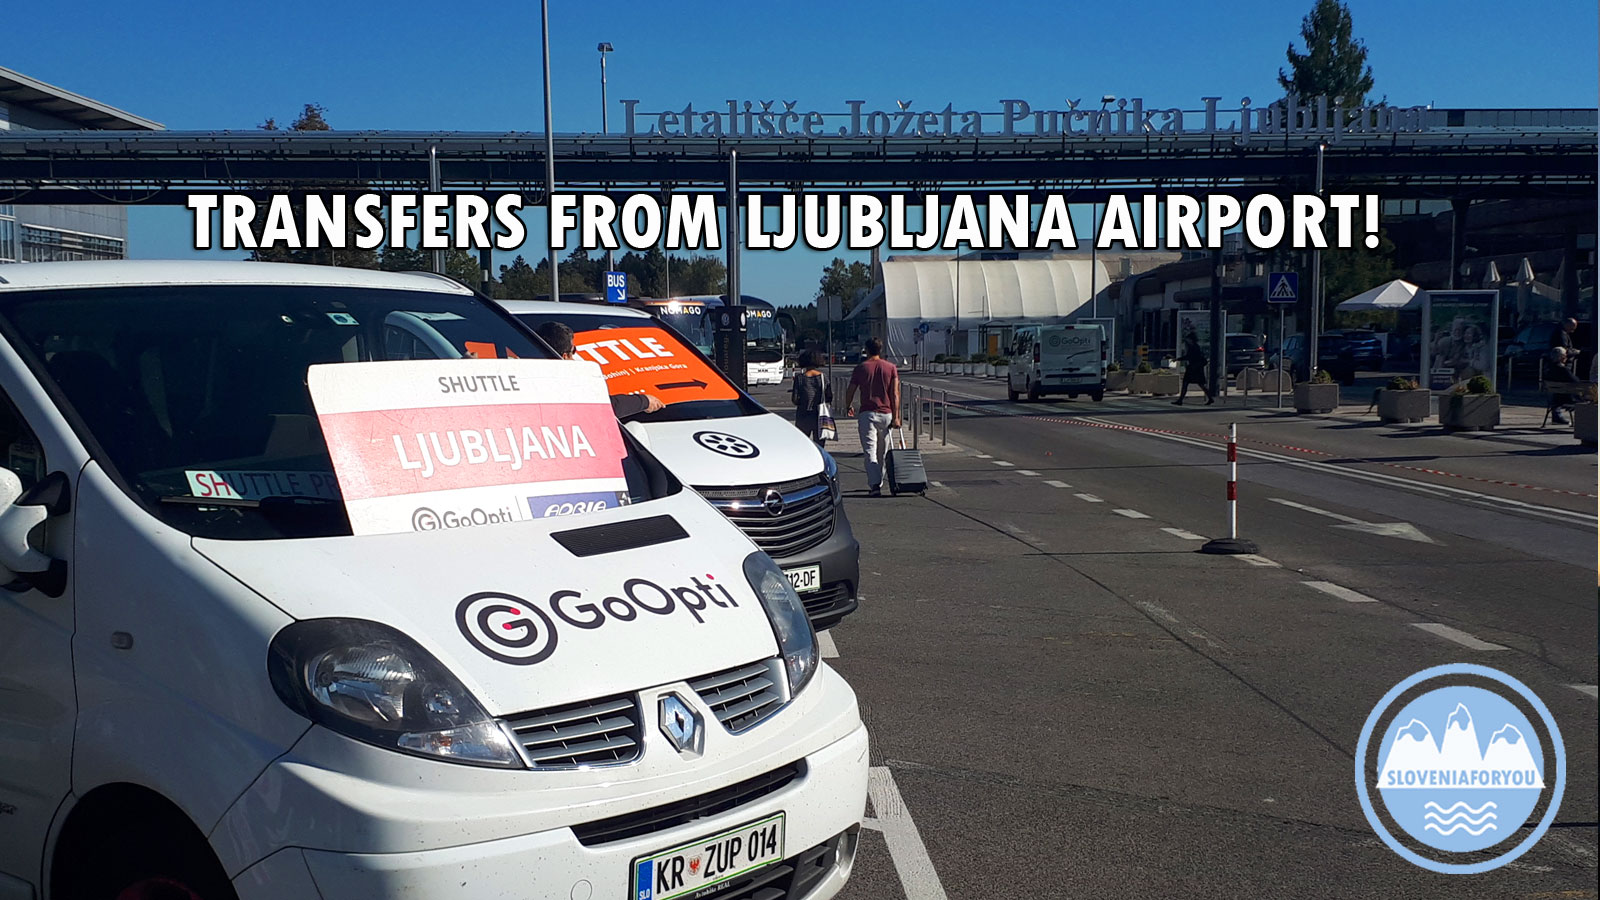 Taxi Transfers at Ljubljana Airport, Sloveniaforyou